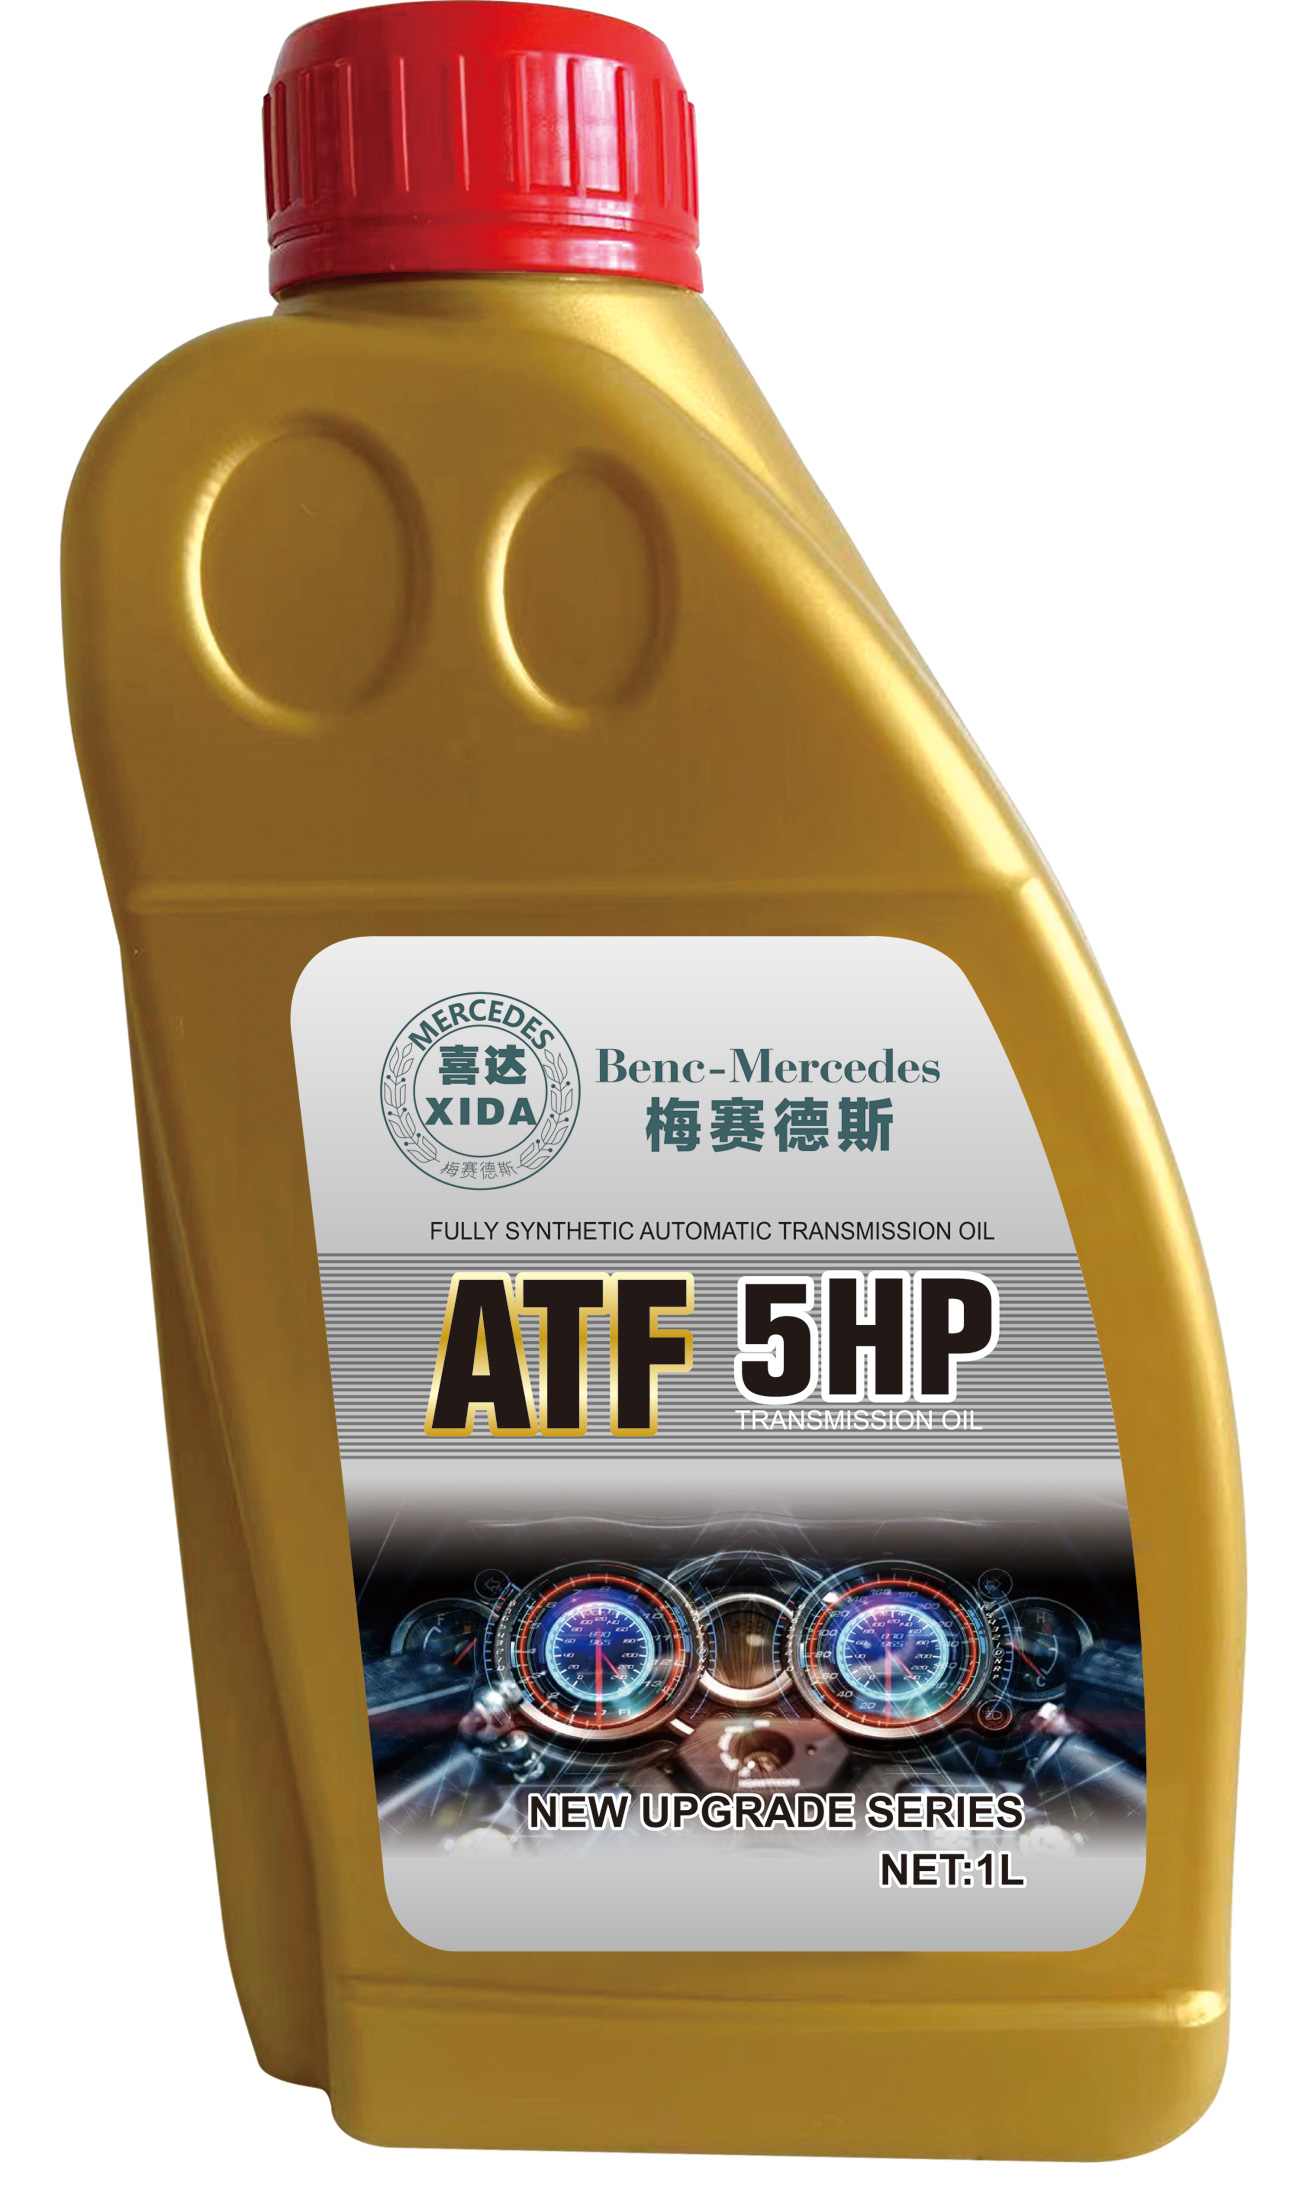 ATF-5HP